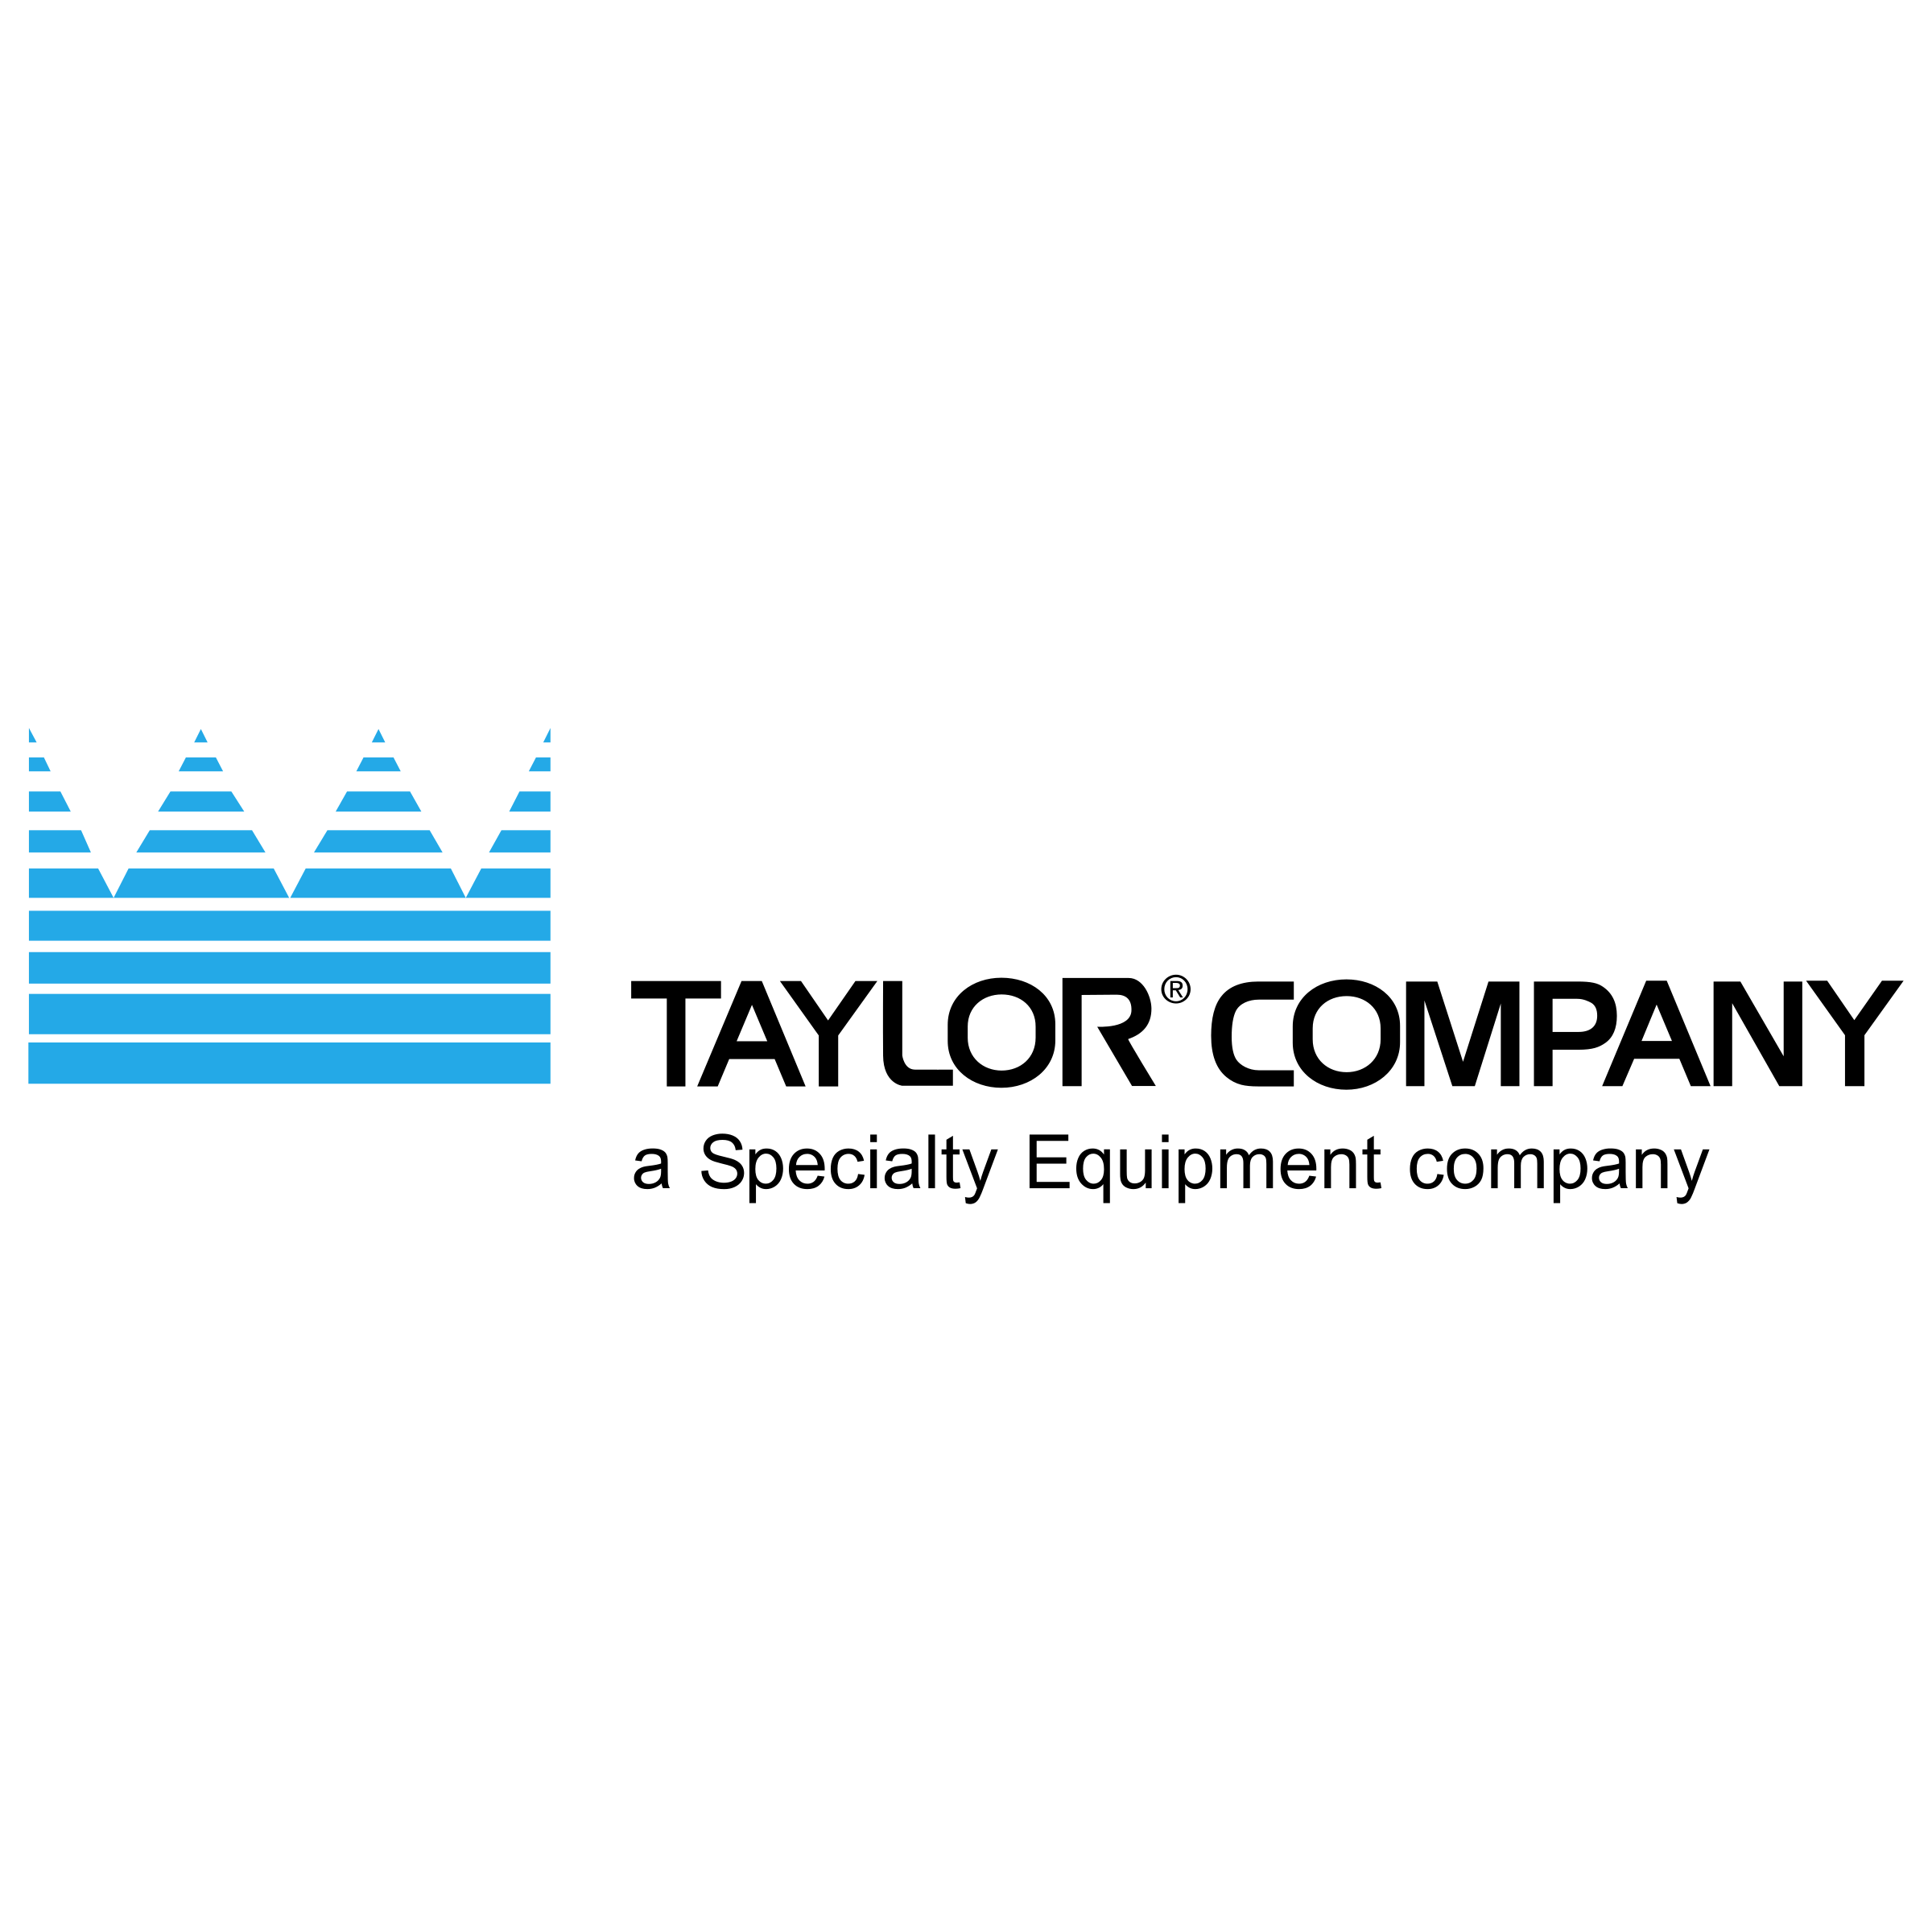 Taylor Logo - Taylor Logo PNG Transparent & SVG Vector - Freebie Supply